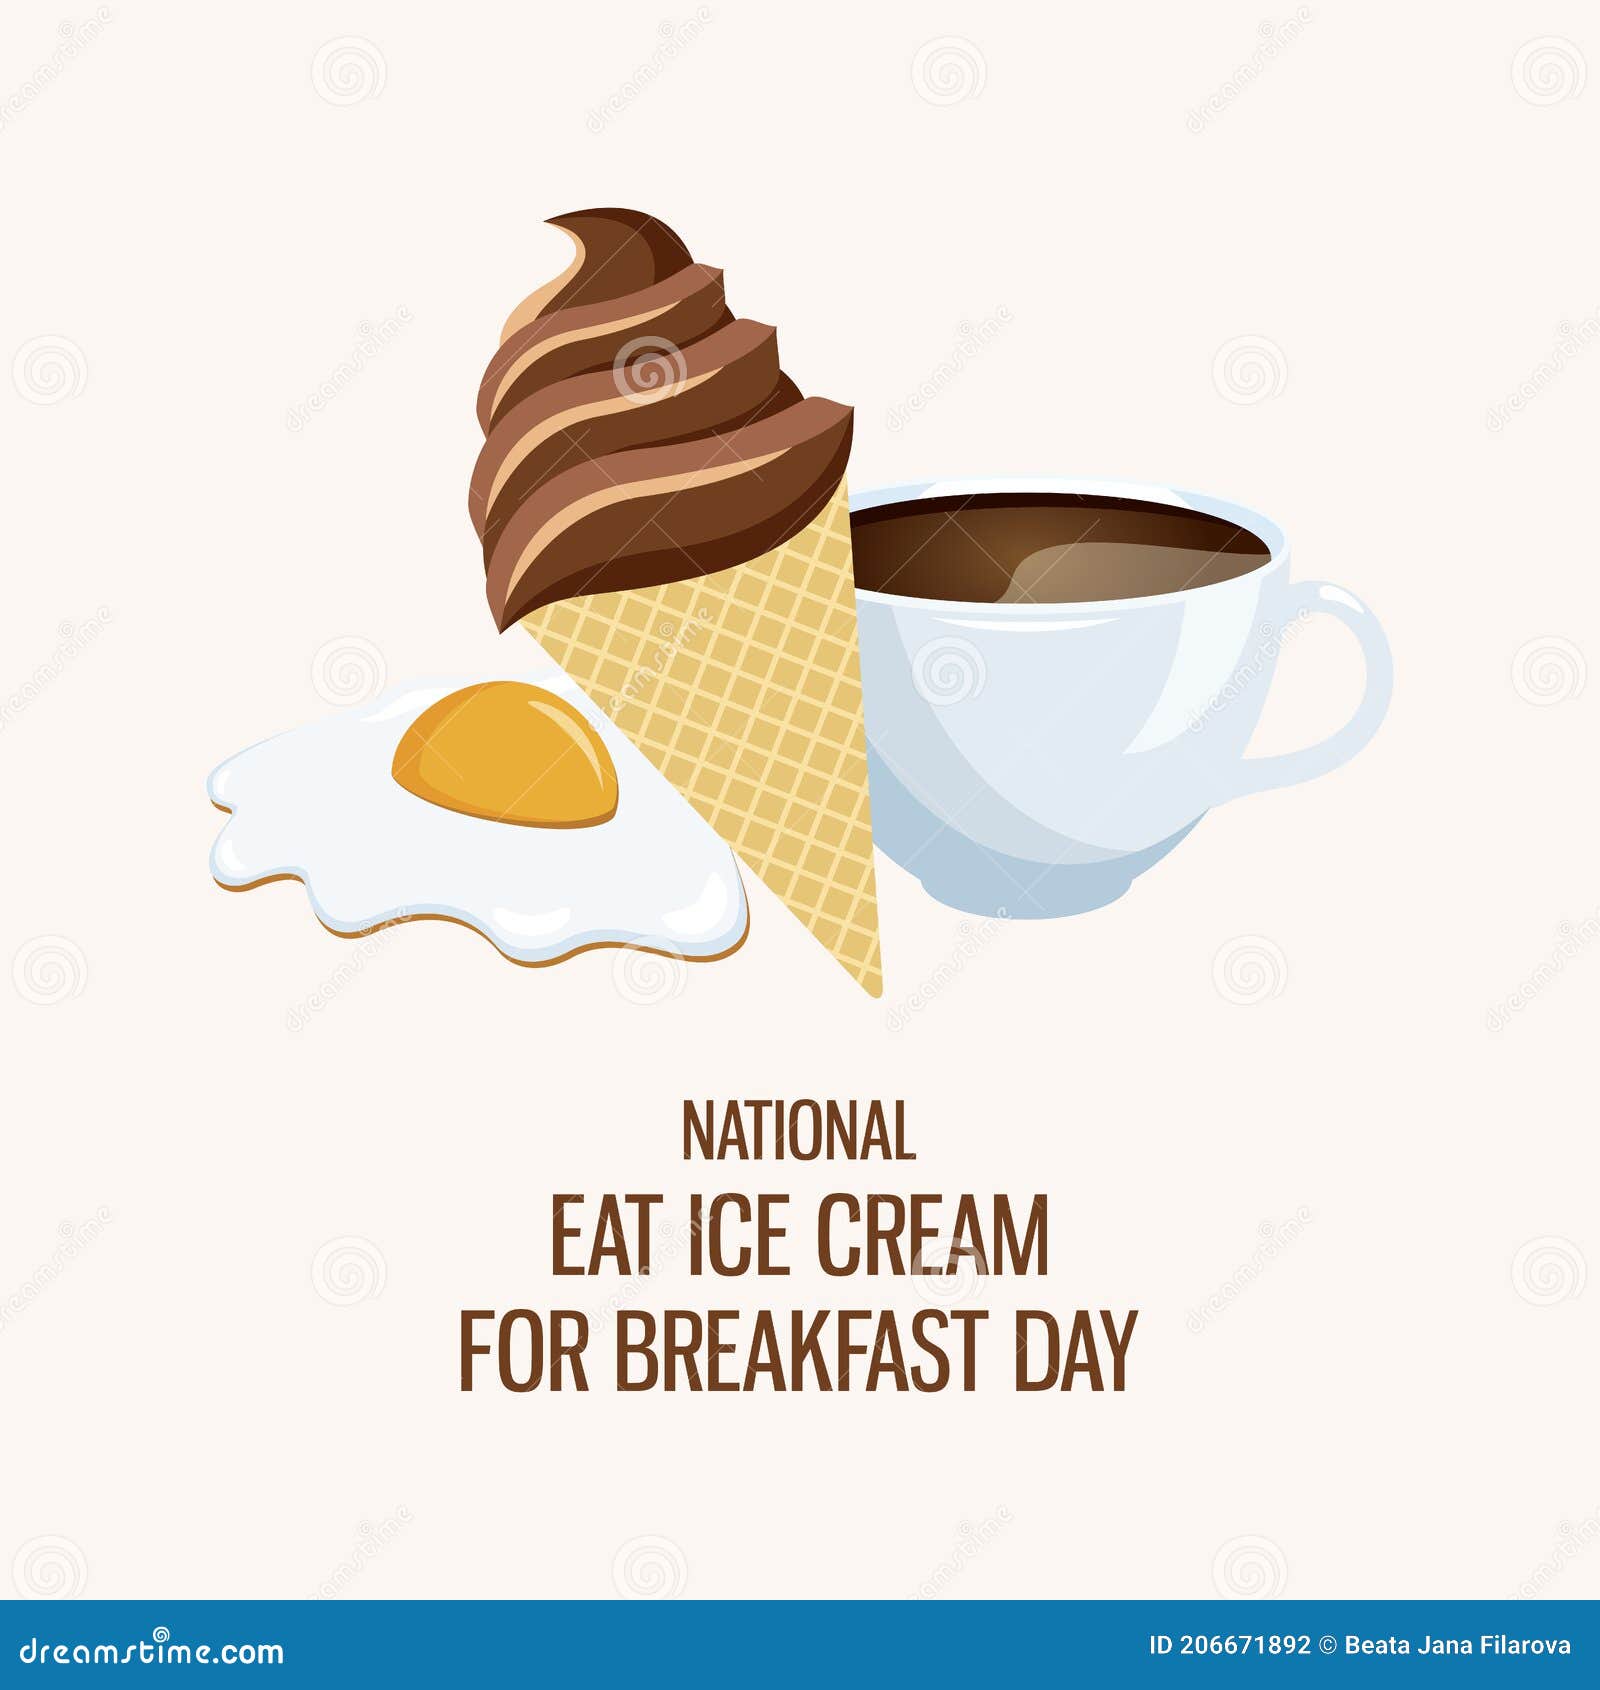 National Eat Ice Cream for Breakfast Day Vector Stock Vector